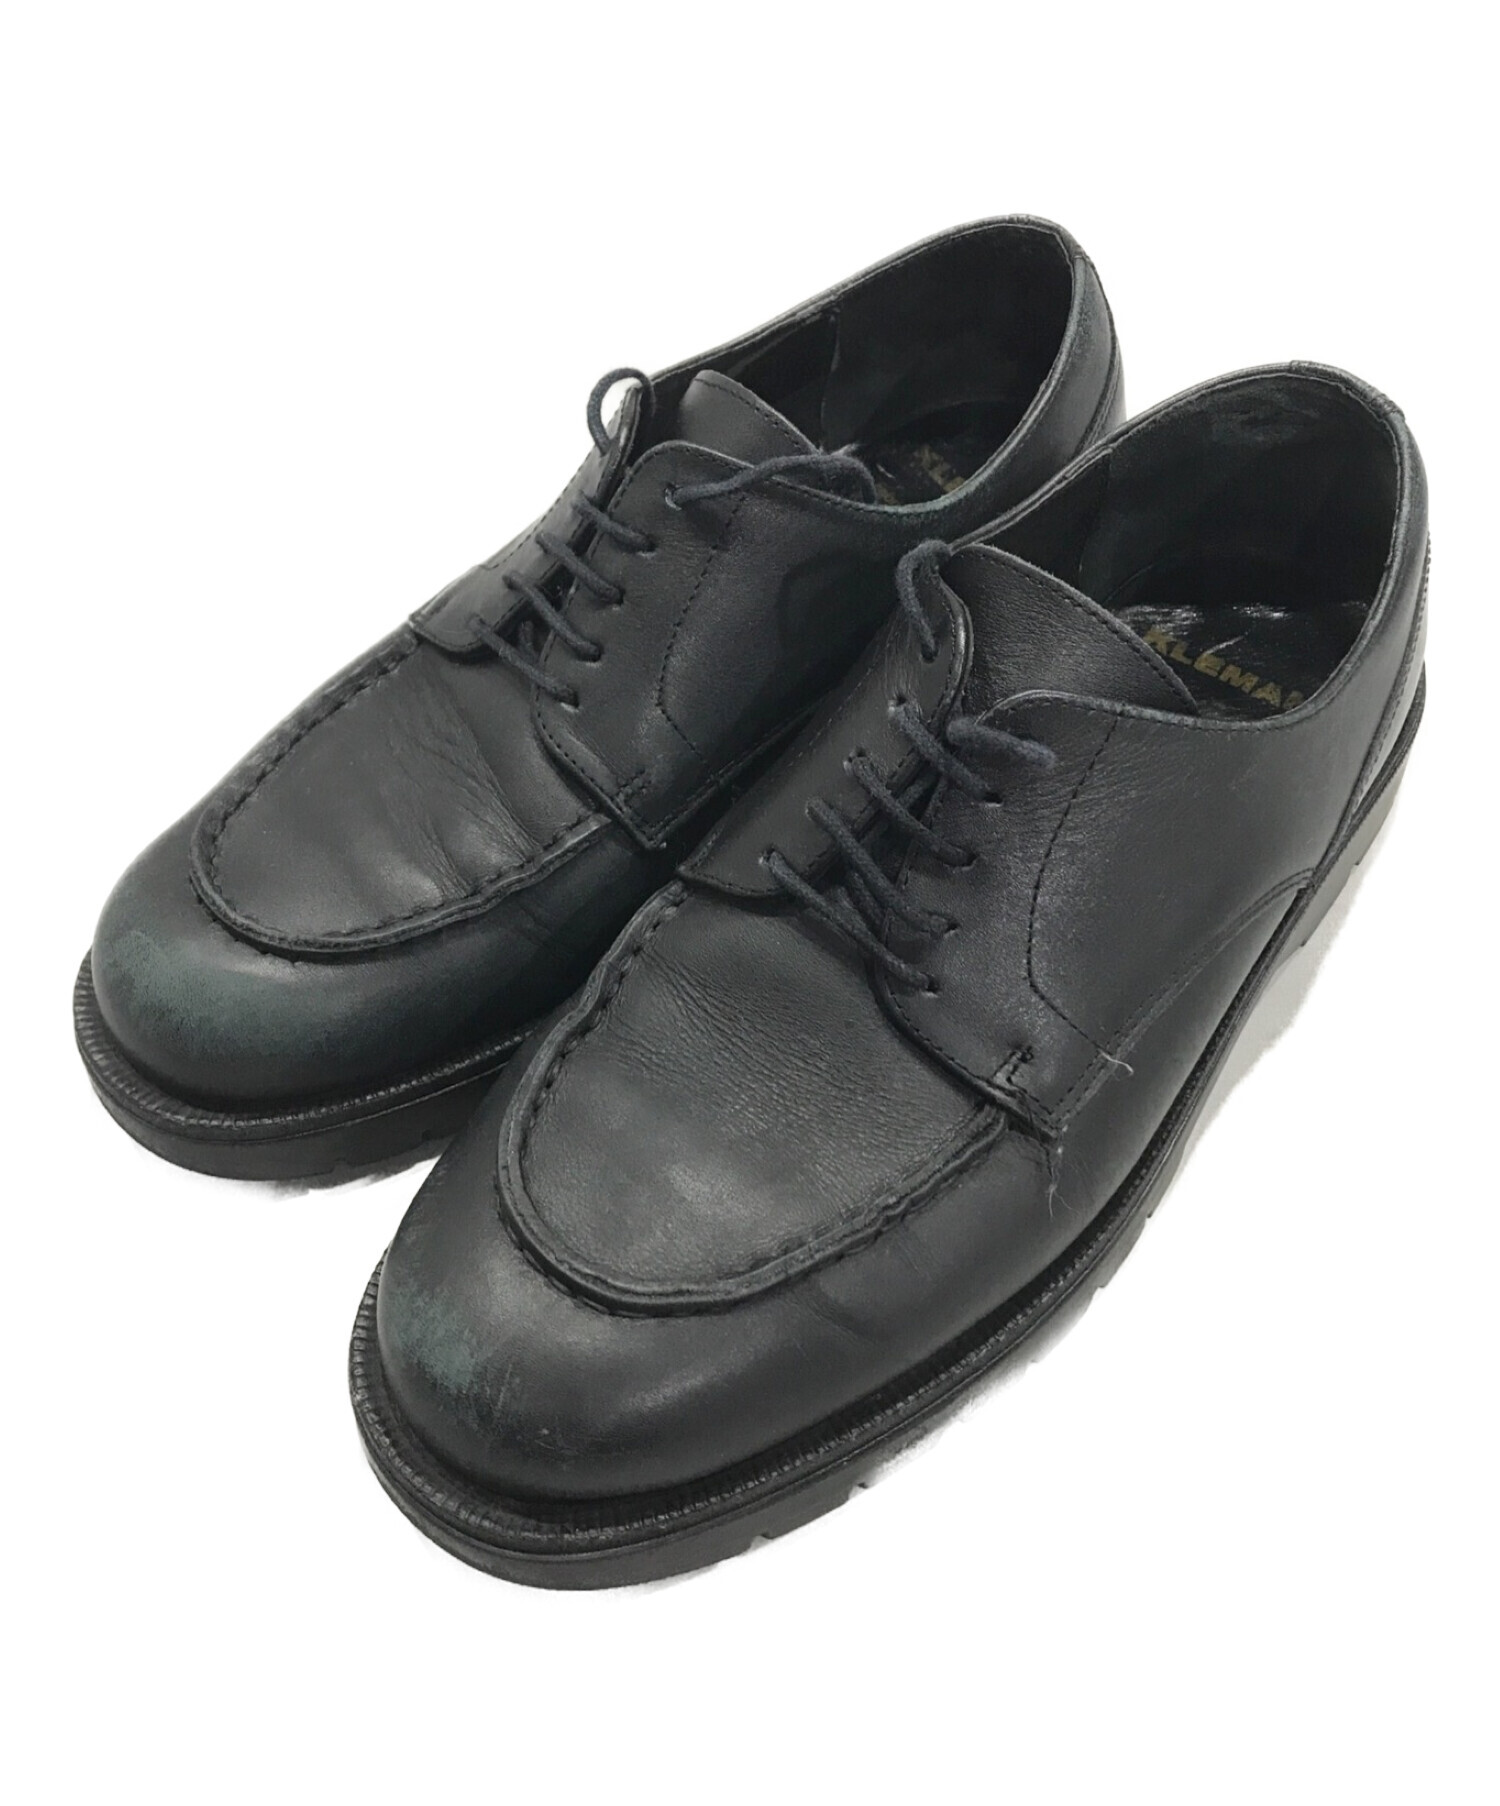 KLEMAN (クレマン) FRODA U Chip Leather Shoes ブラック サイズ:40